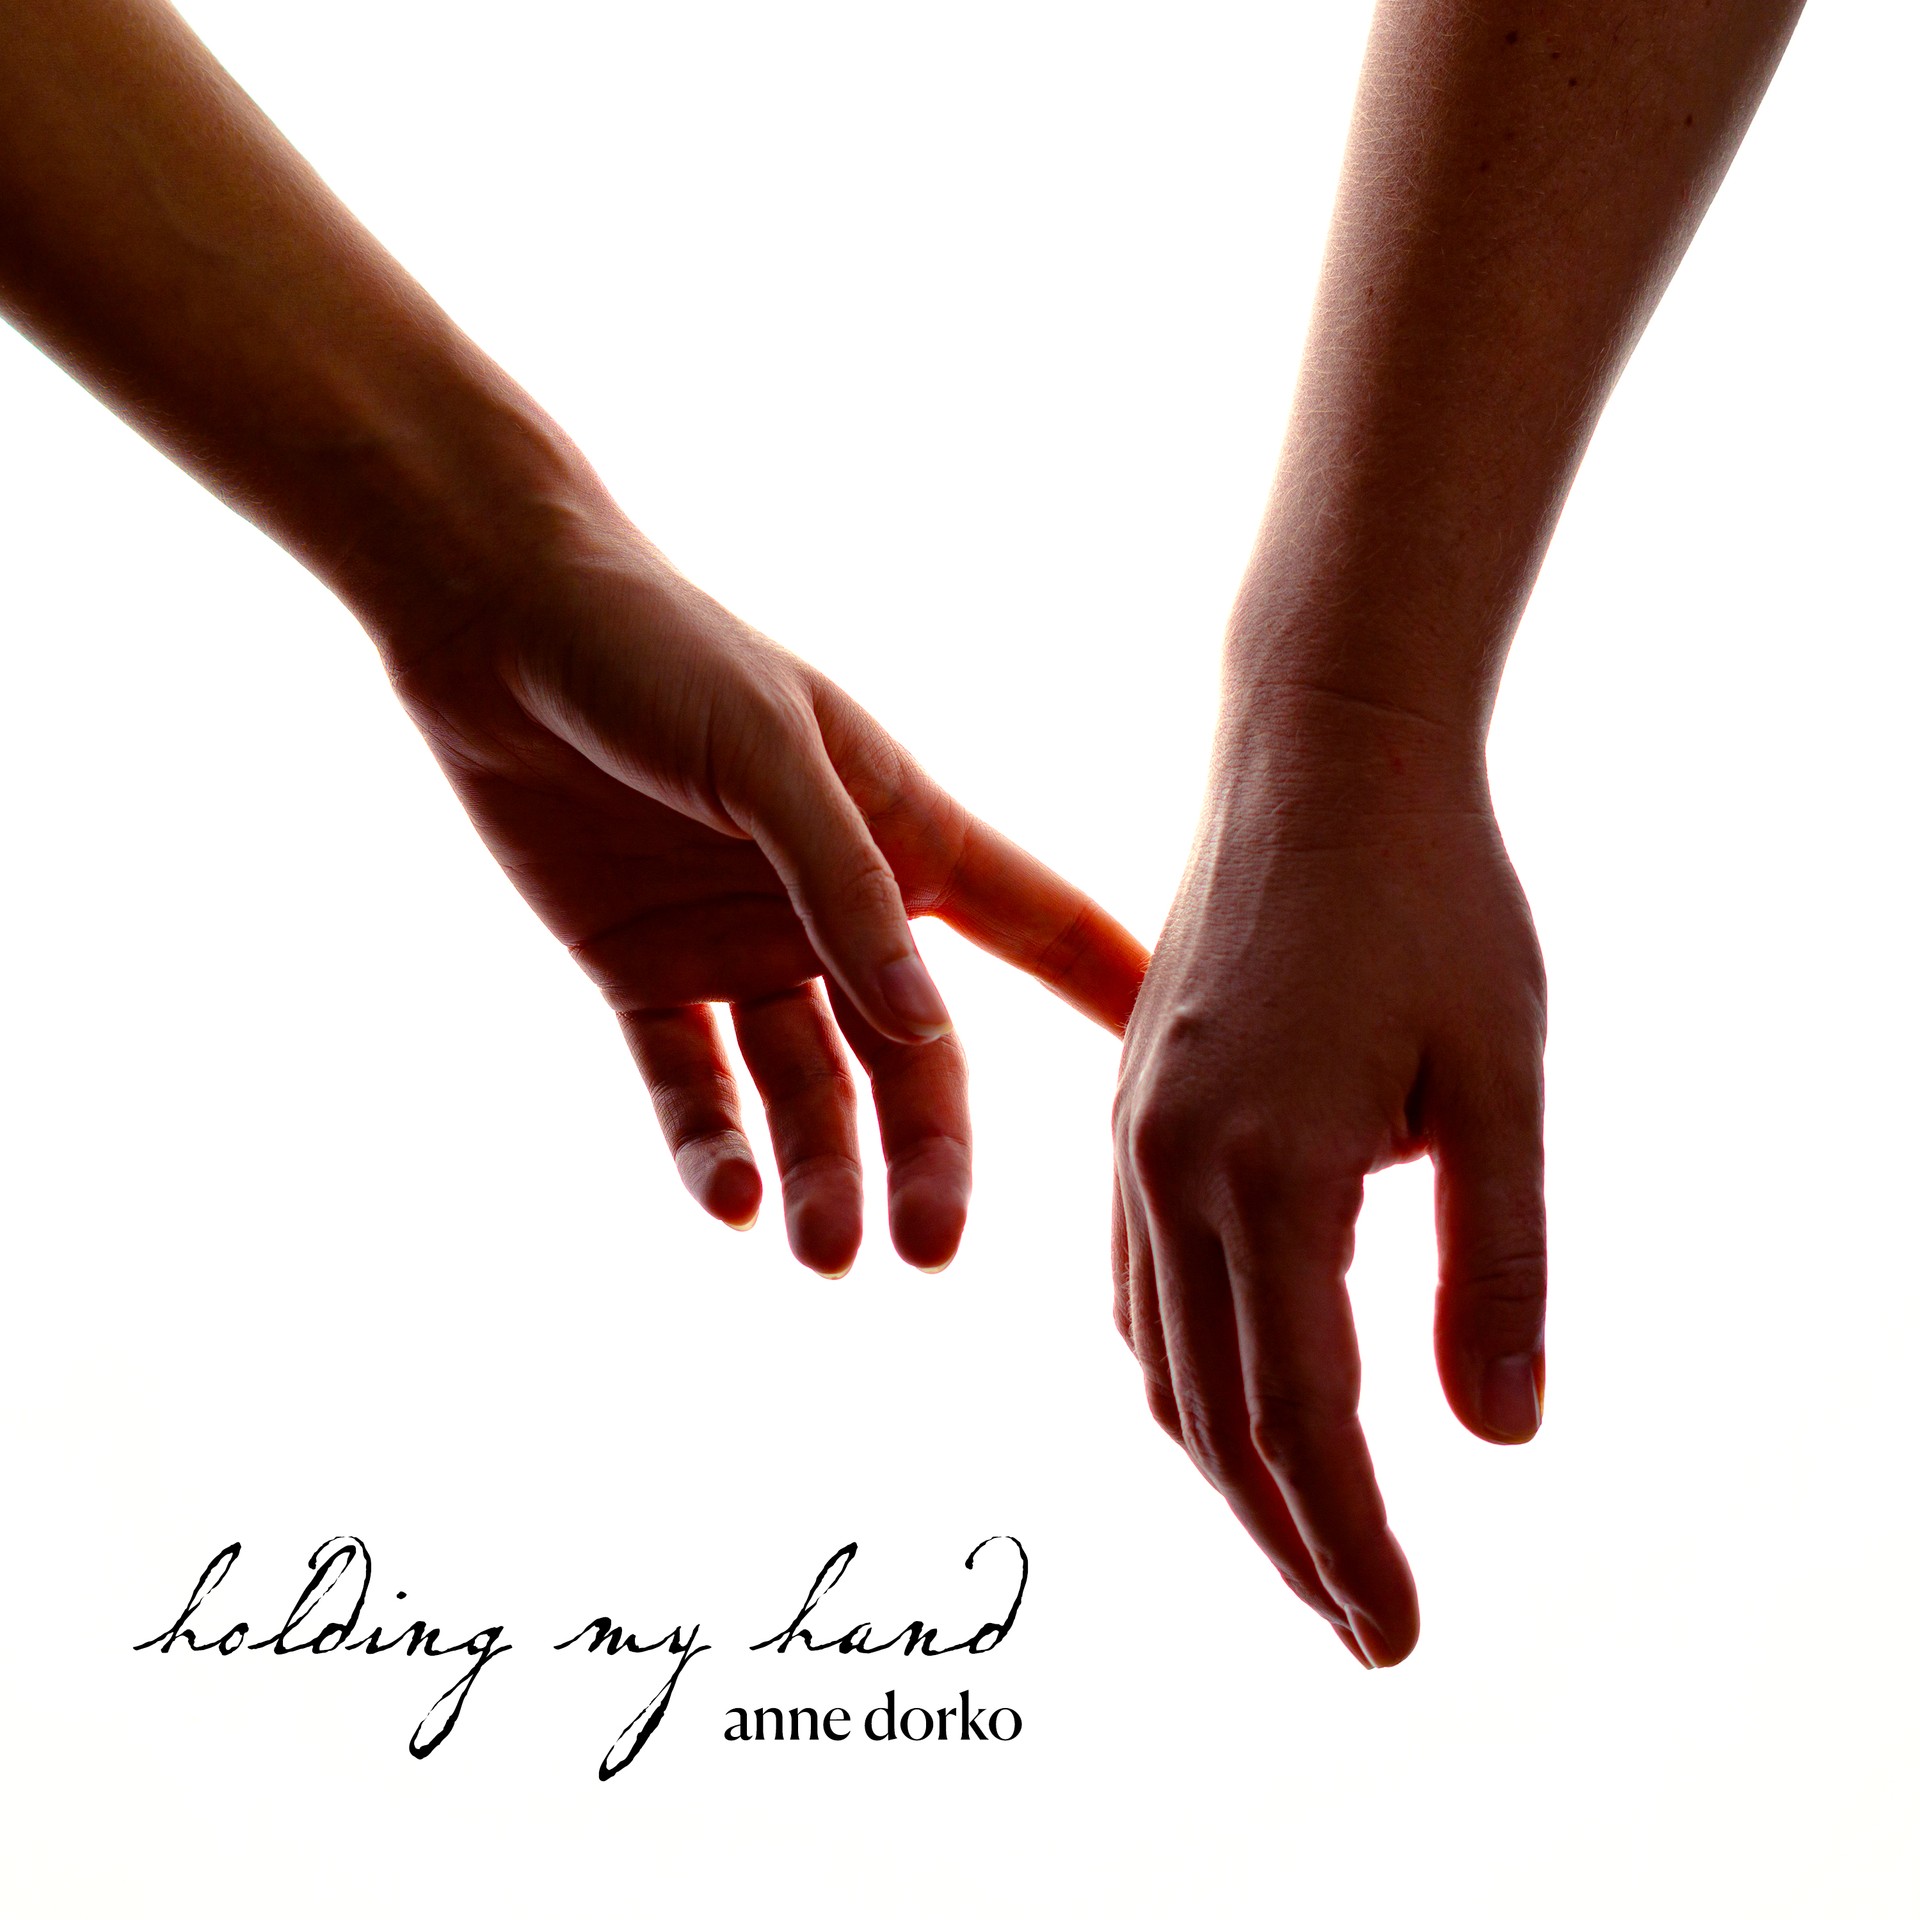 Holding My Hand album cover art